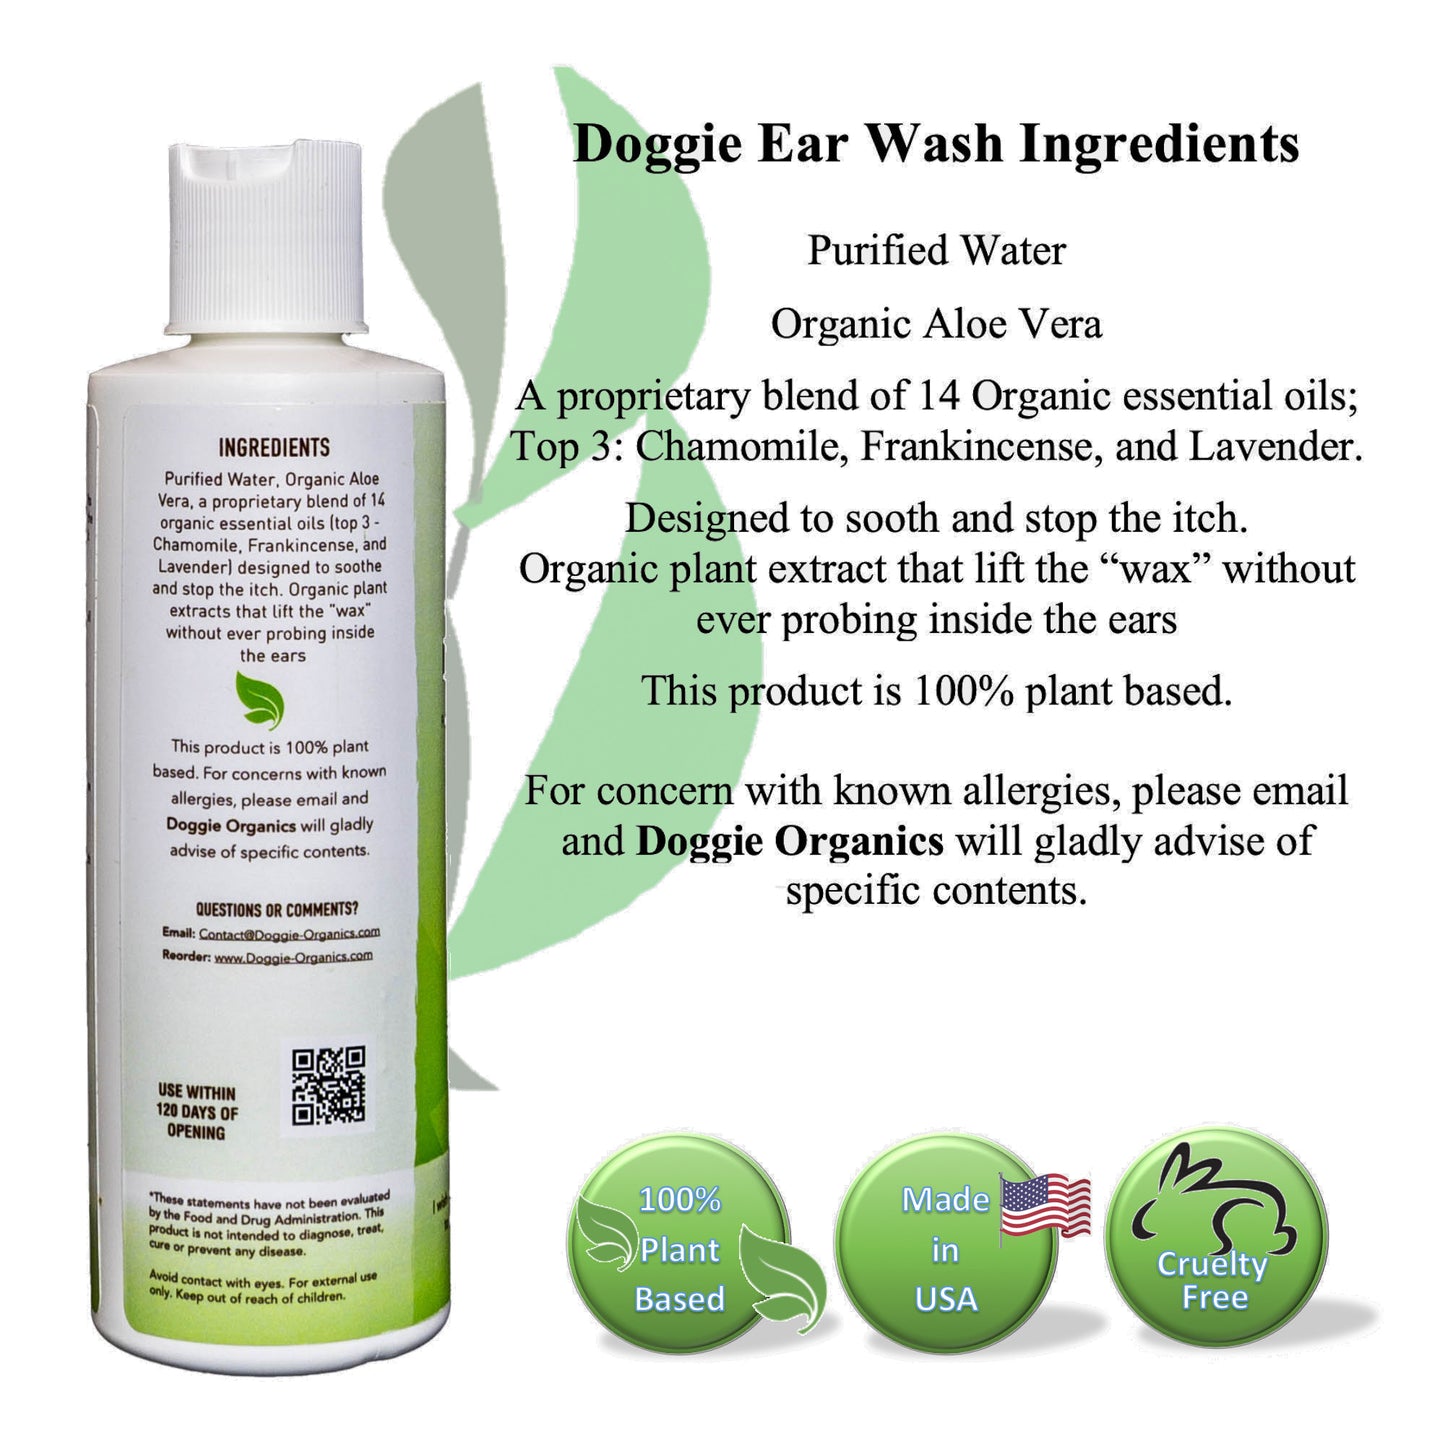 Doggie Organics Ear Wash Ingredients. 100% plant based.